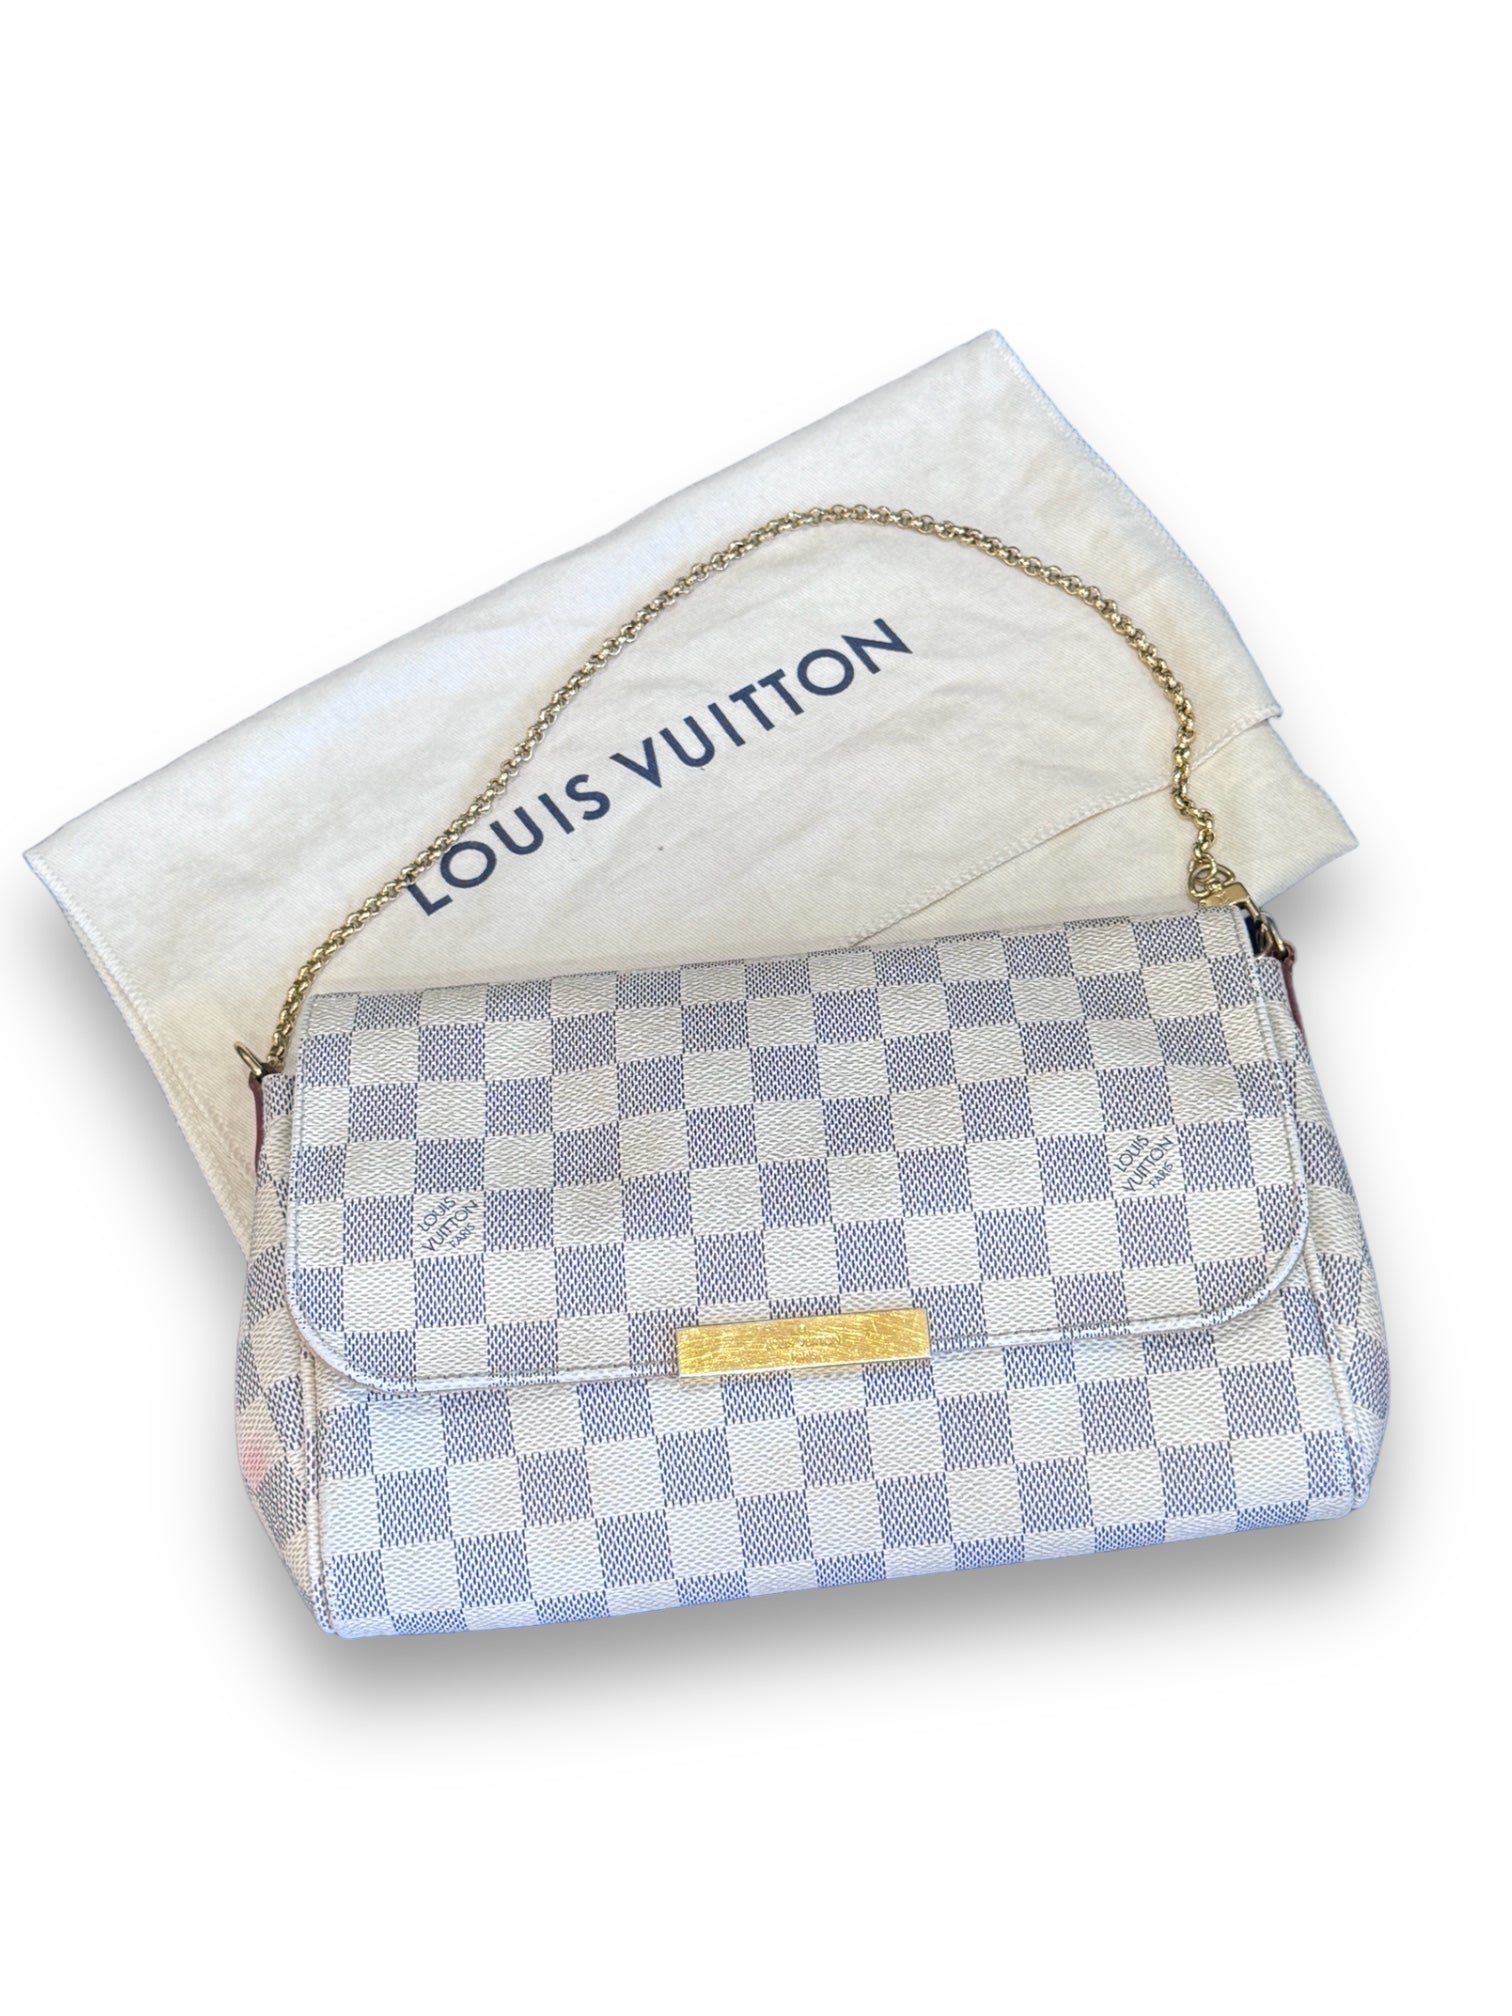 Louis Vuitton Favorite MM bag